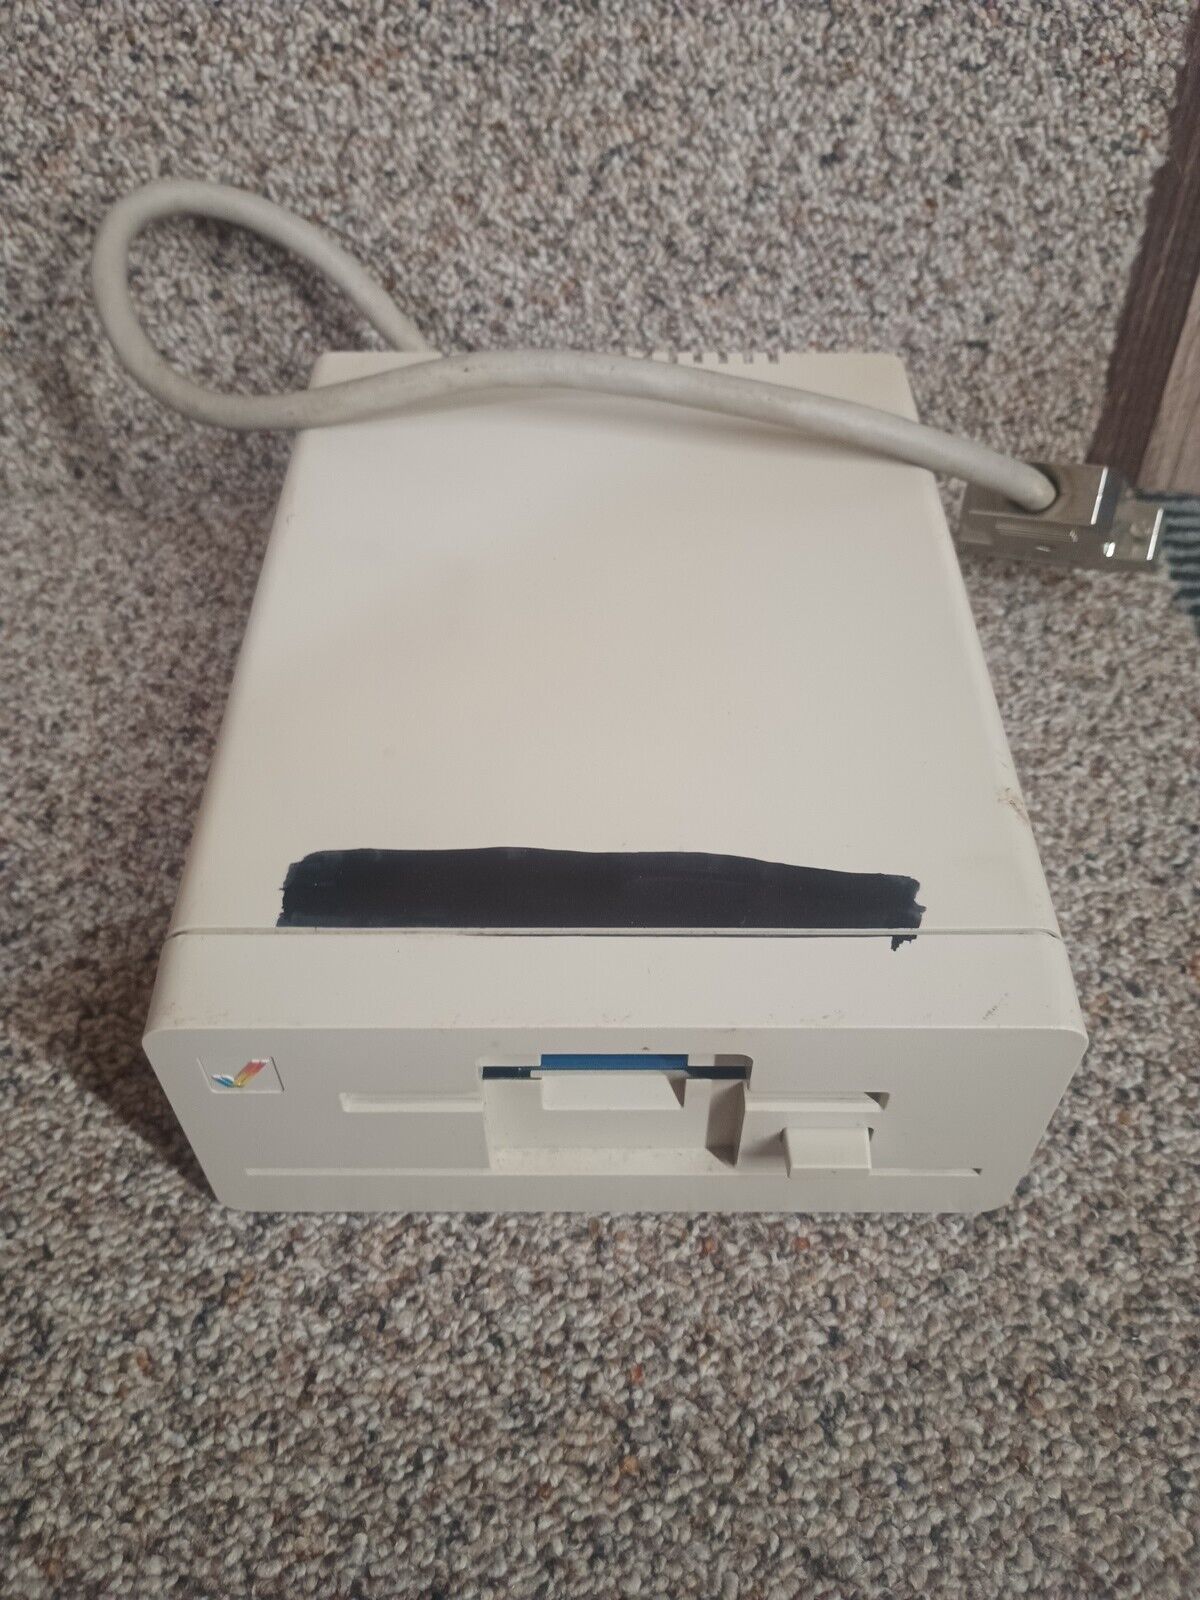 Commodore Amiga External 3.5 Disk Drive Amiga 1010 Untested 